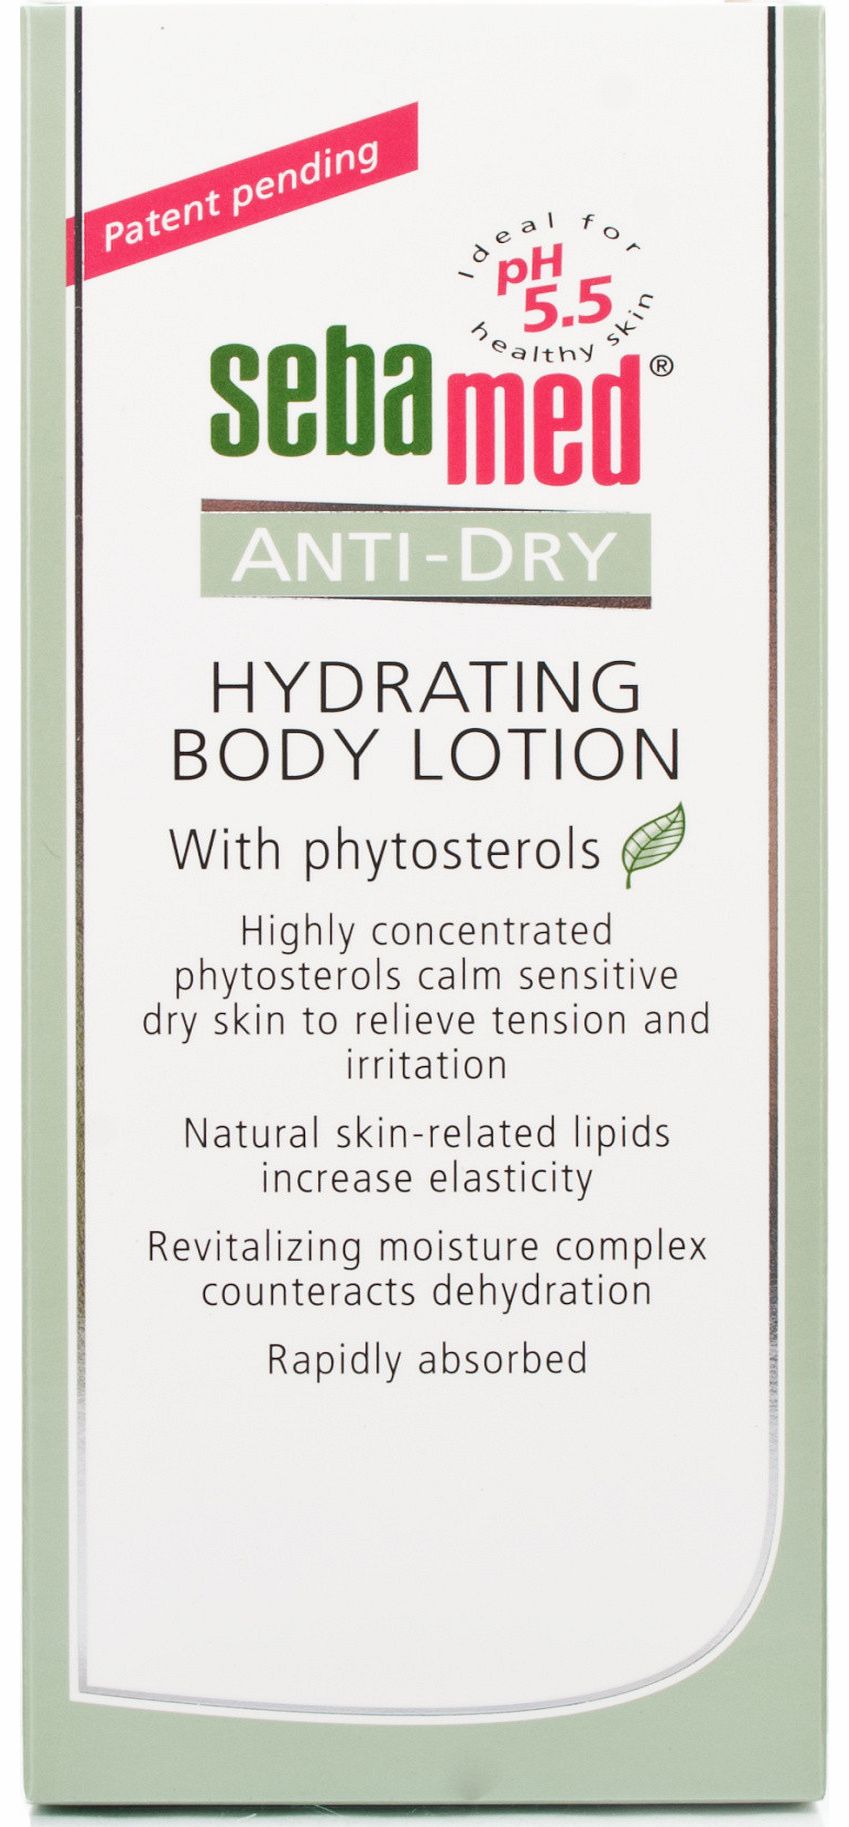 Anti-Dry Hydrating Body Lotion